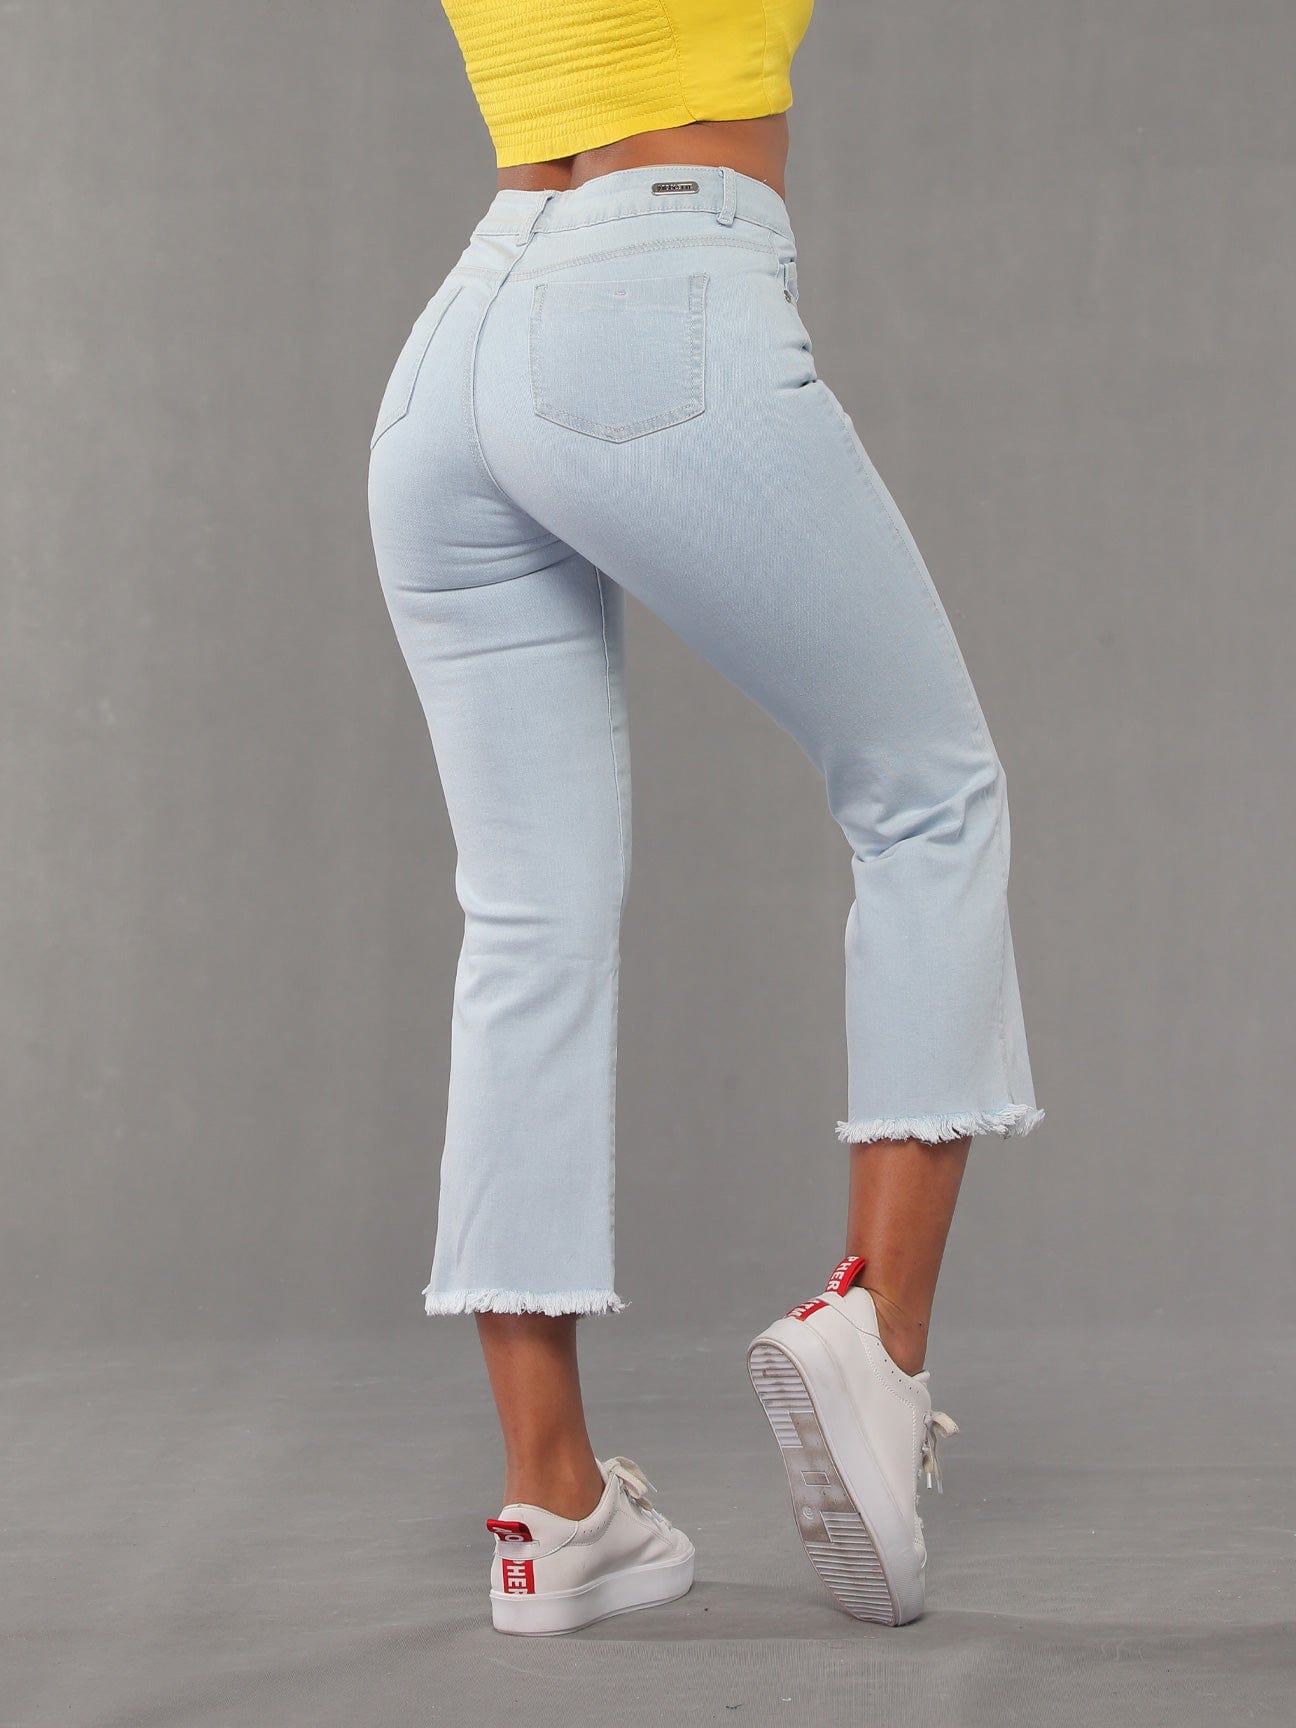 DIAMANTE - LOWLA 212357 - Bum Lift Flare Colombian Jeans – Melao